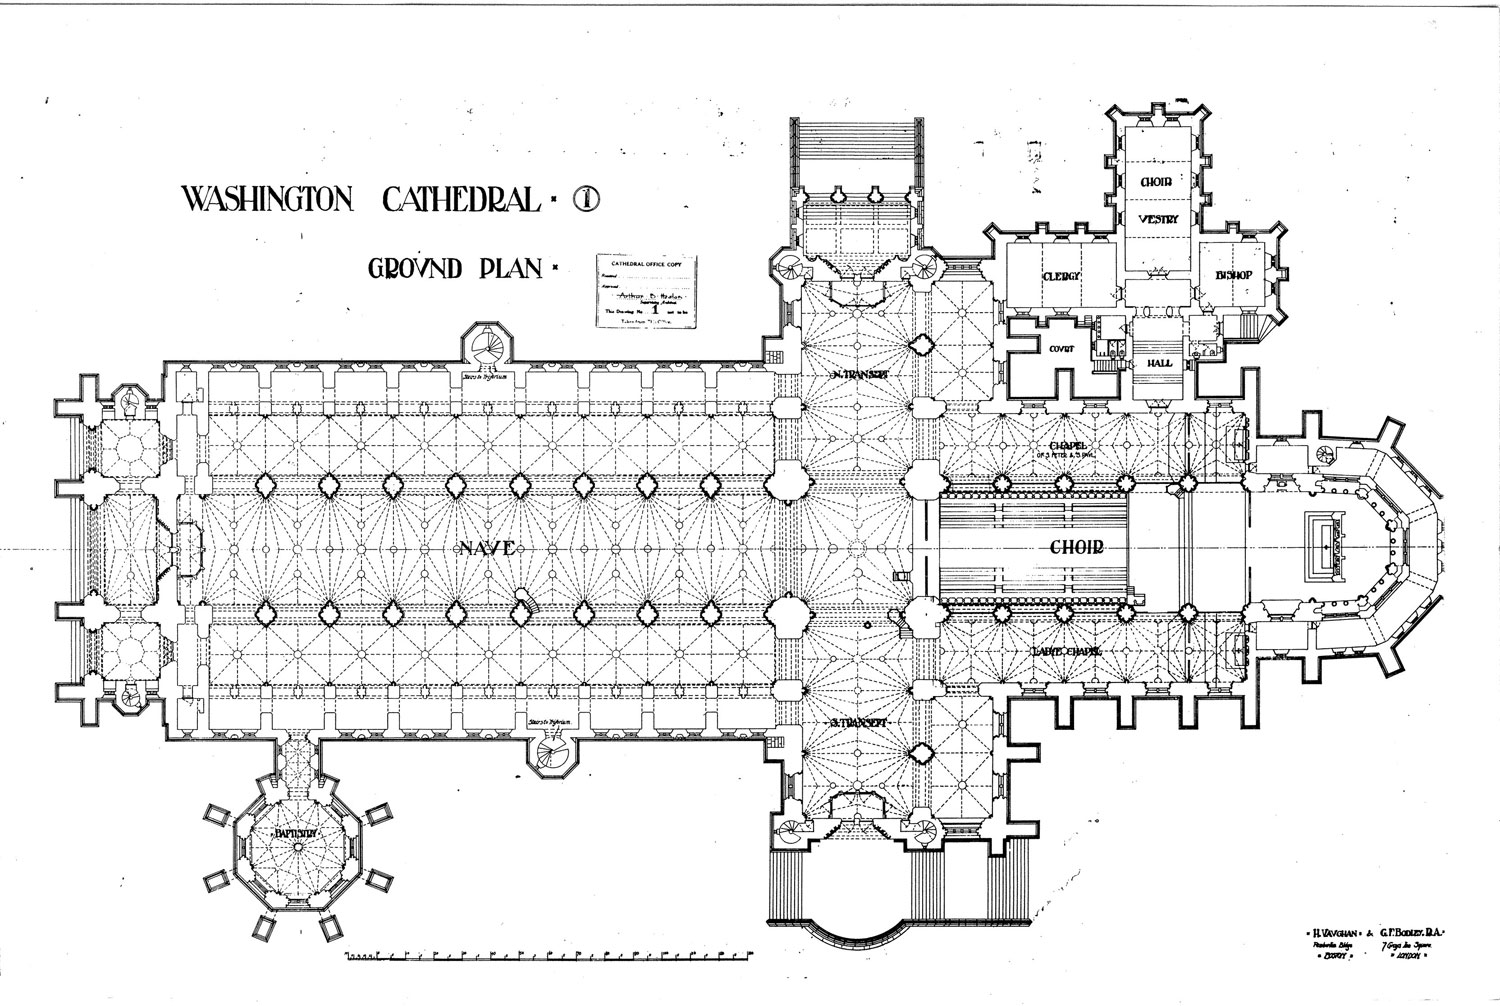 Ground Plan, Washington Cathedral, 1907. Courtesy of Washington National Cathedral Construction Archives Collection, National Building Museum Collection.